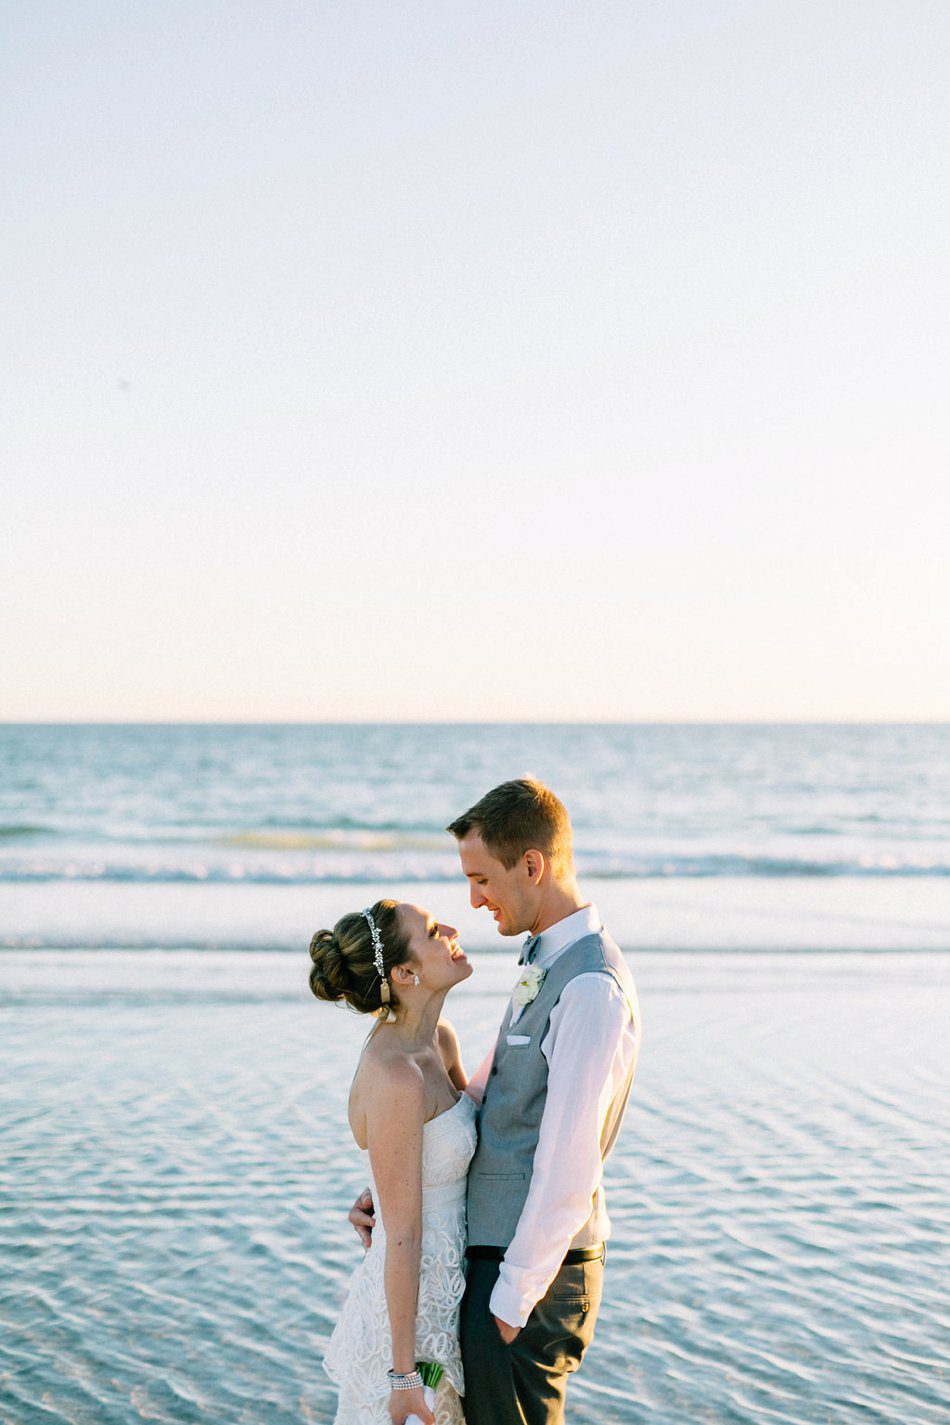 Beach wedding photo by Catherine Ann Photography